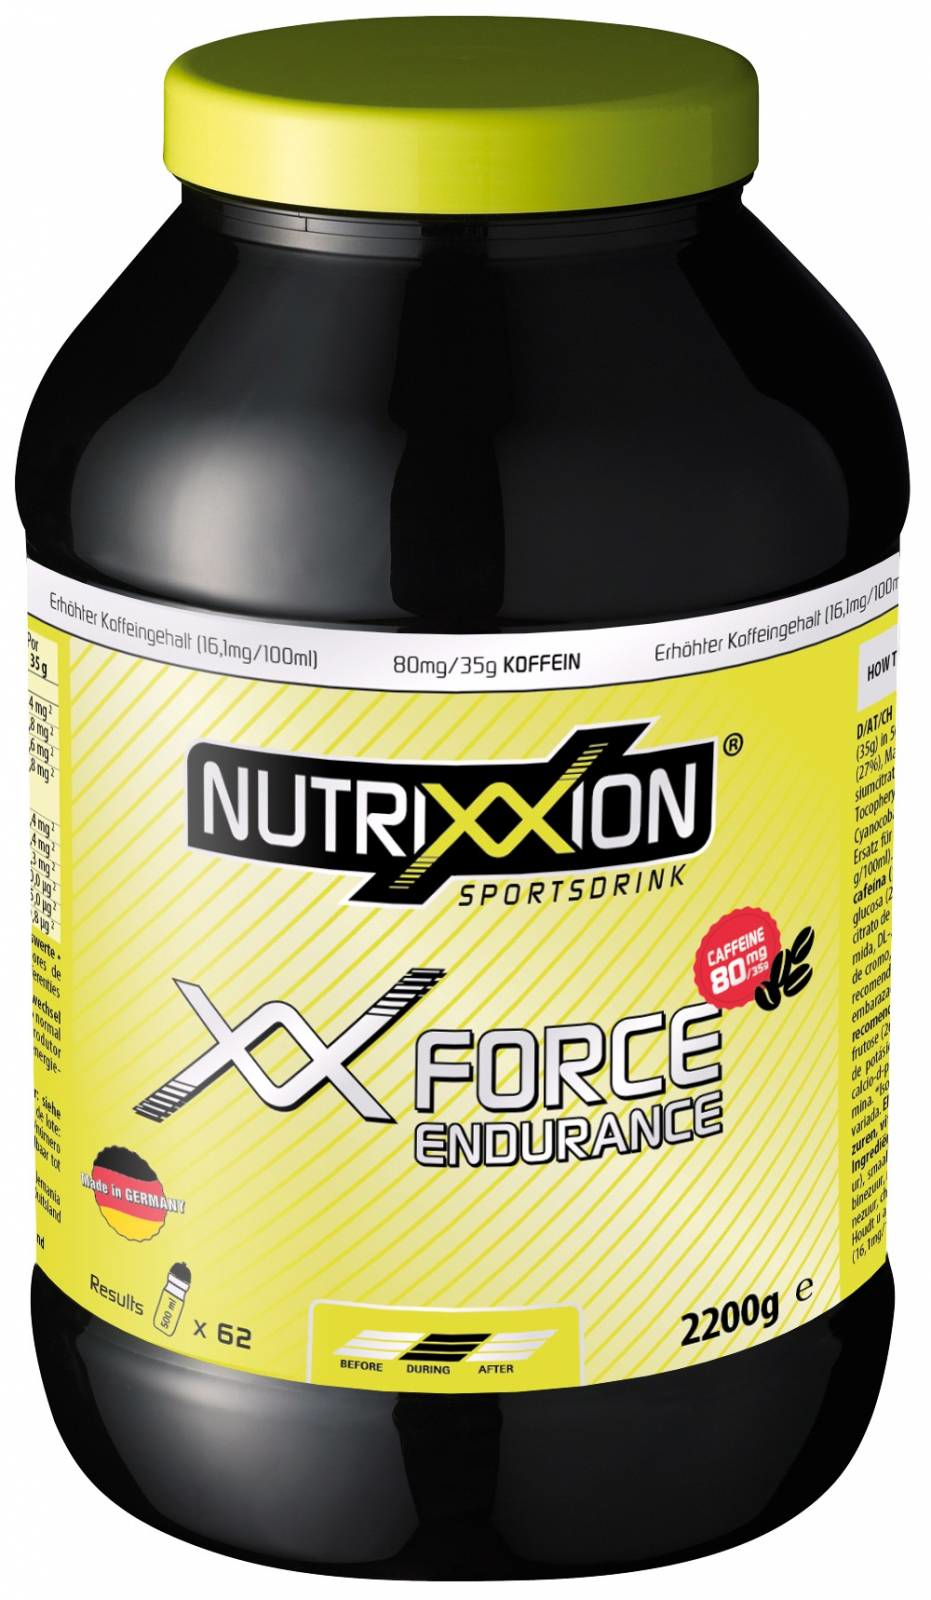 Nutrixxion Sportdrank Endurance XX Force 2200g